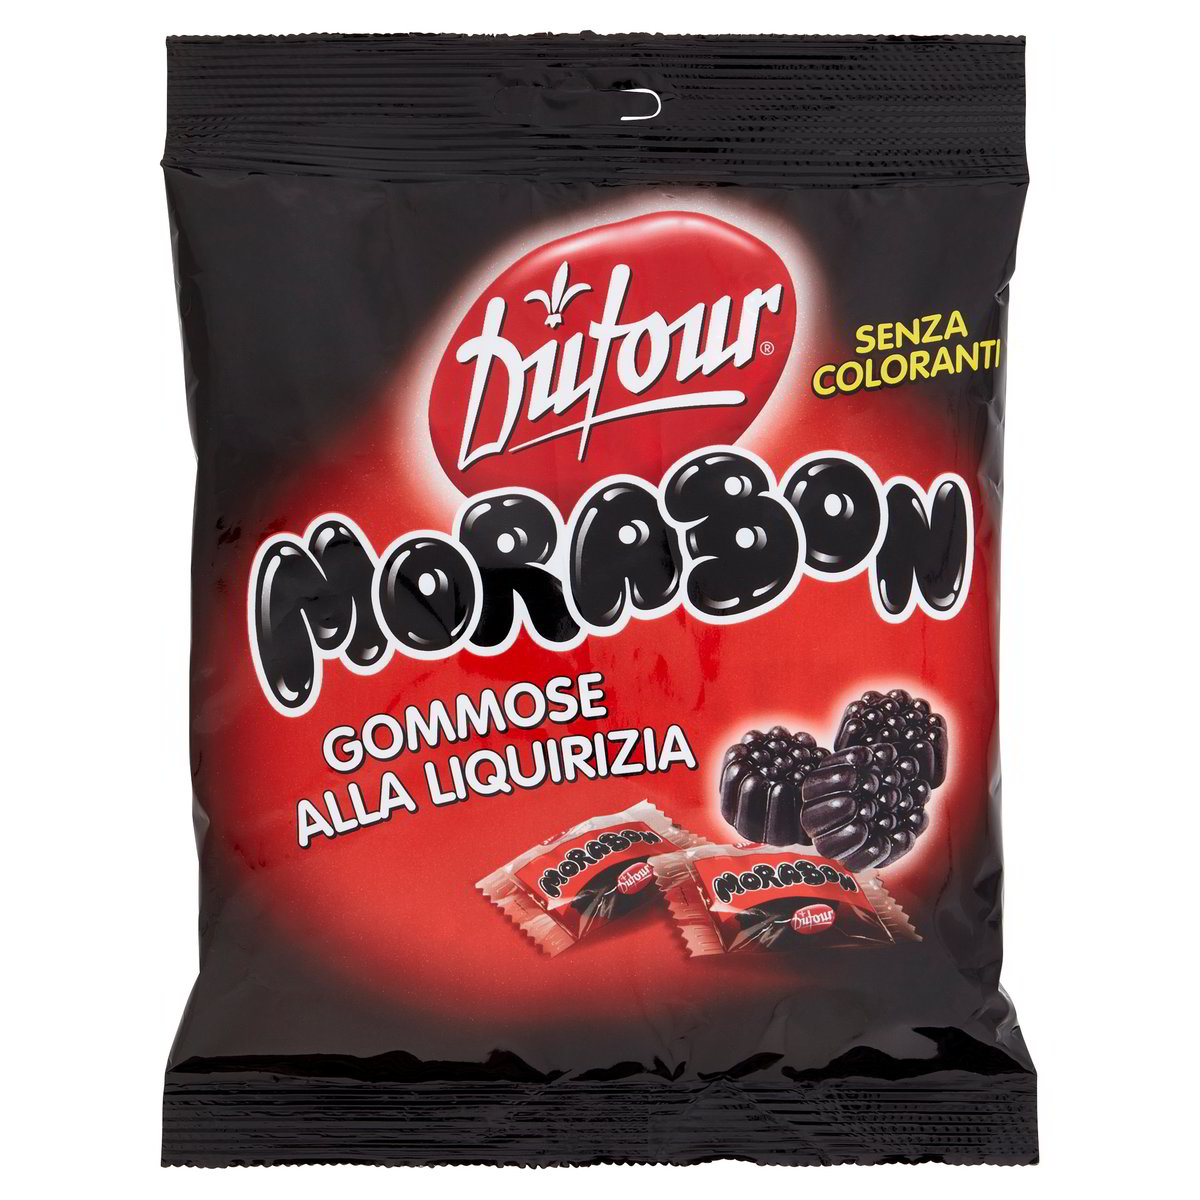 Morabon